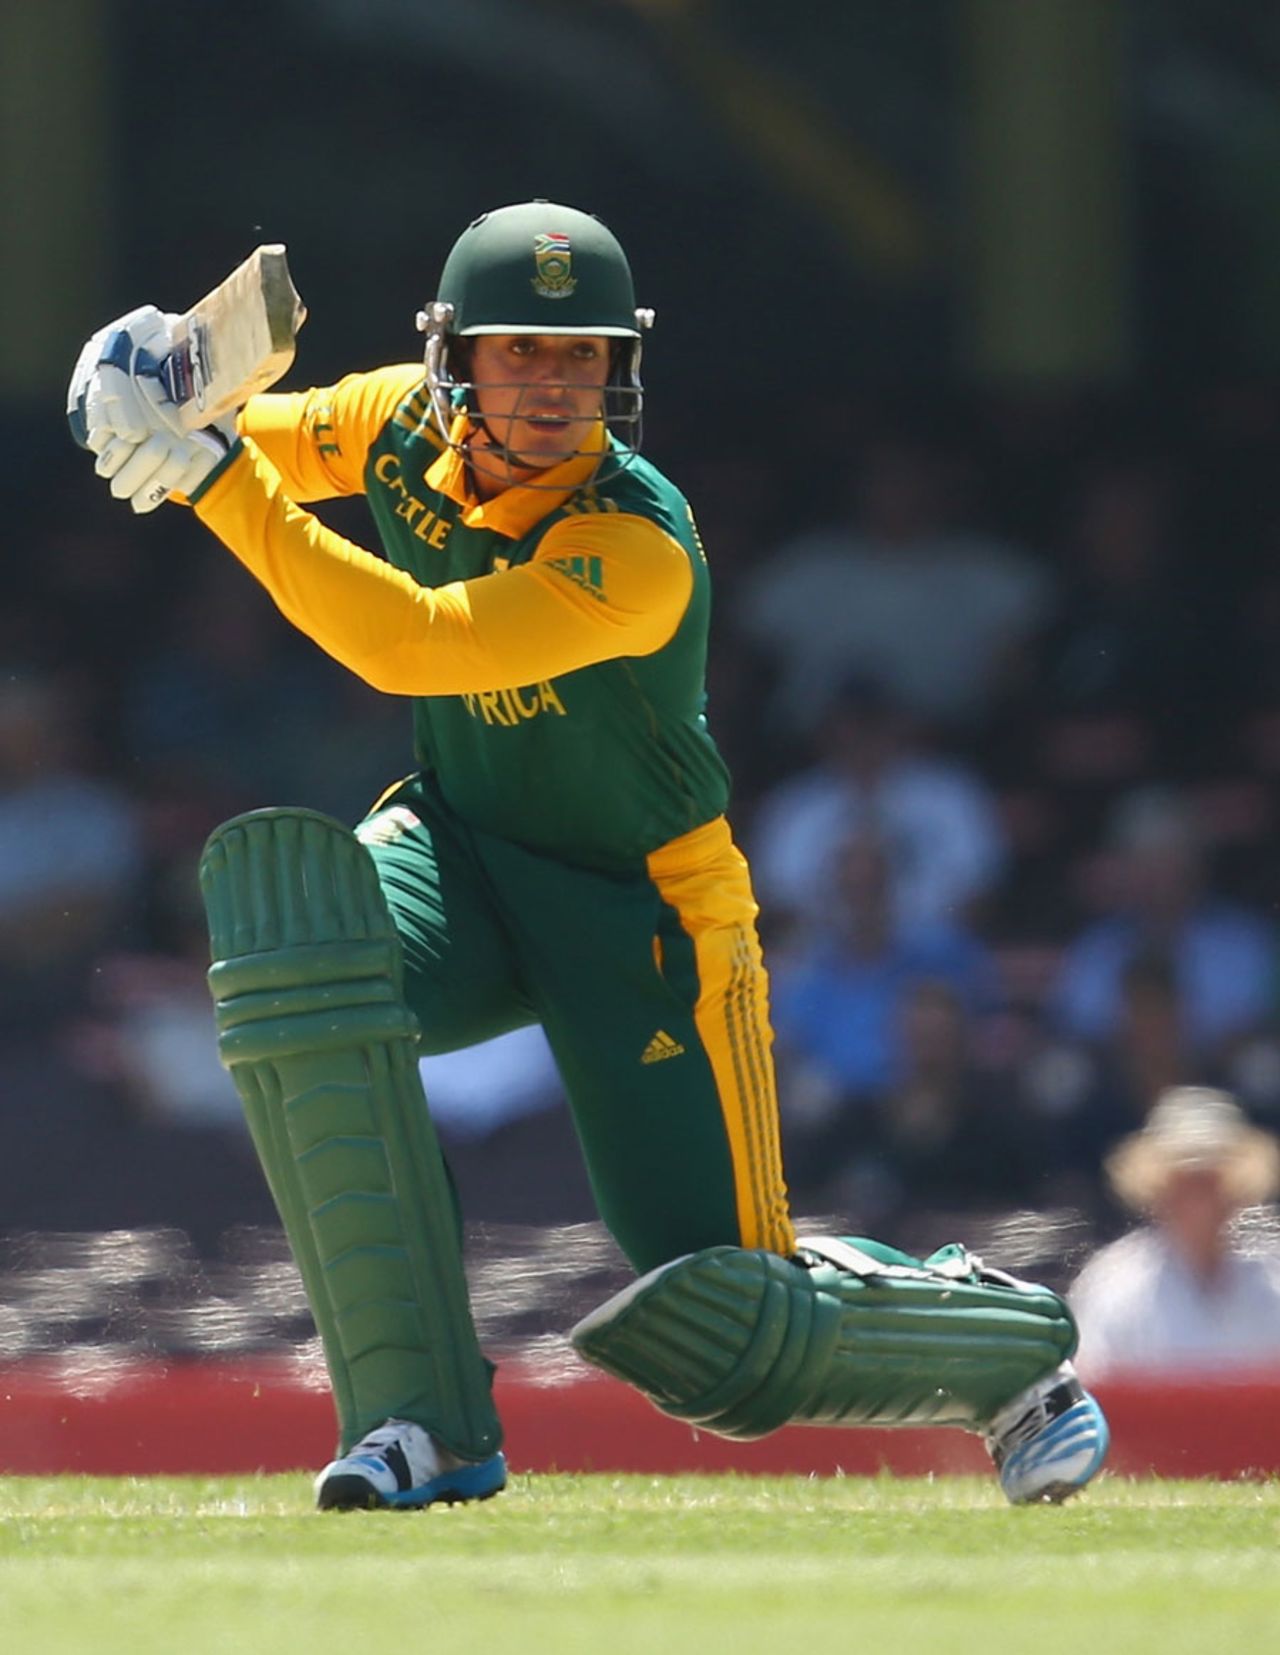 Quinton de Kock creams one through the covers, Australia v South Africa, 5th ODI, Sydney, November 23, 2014